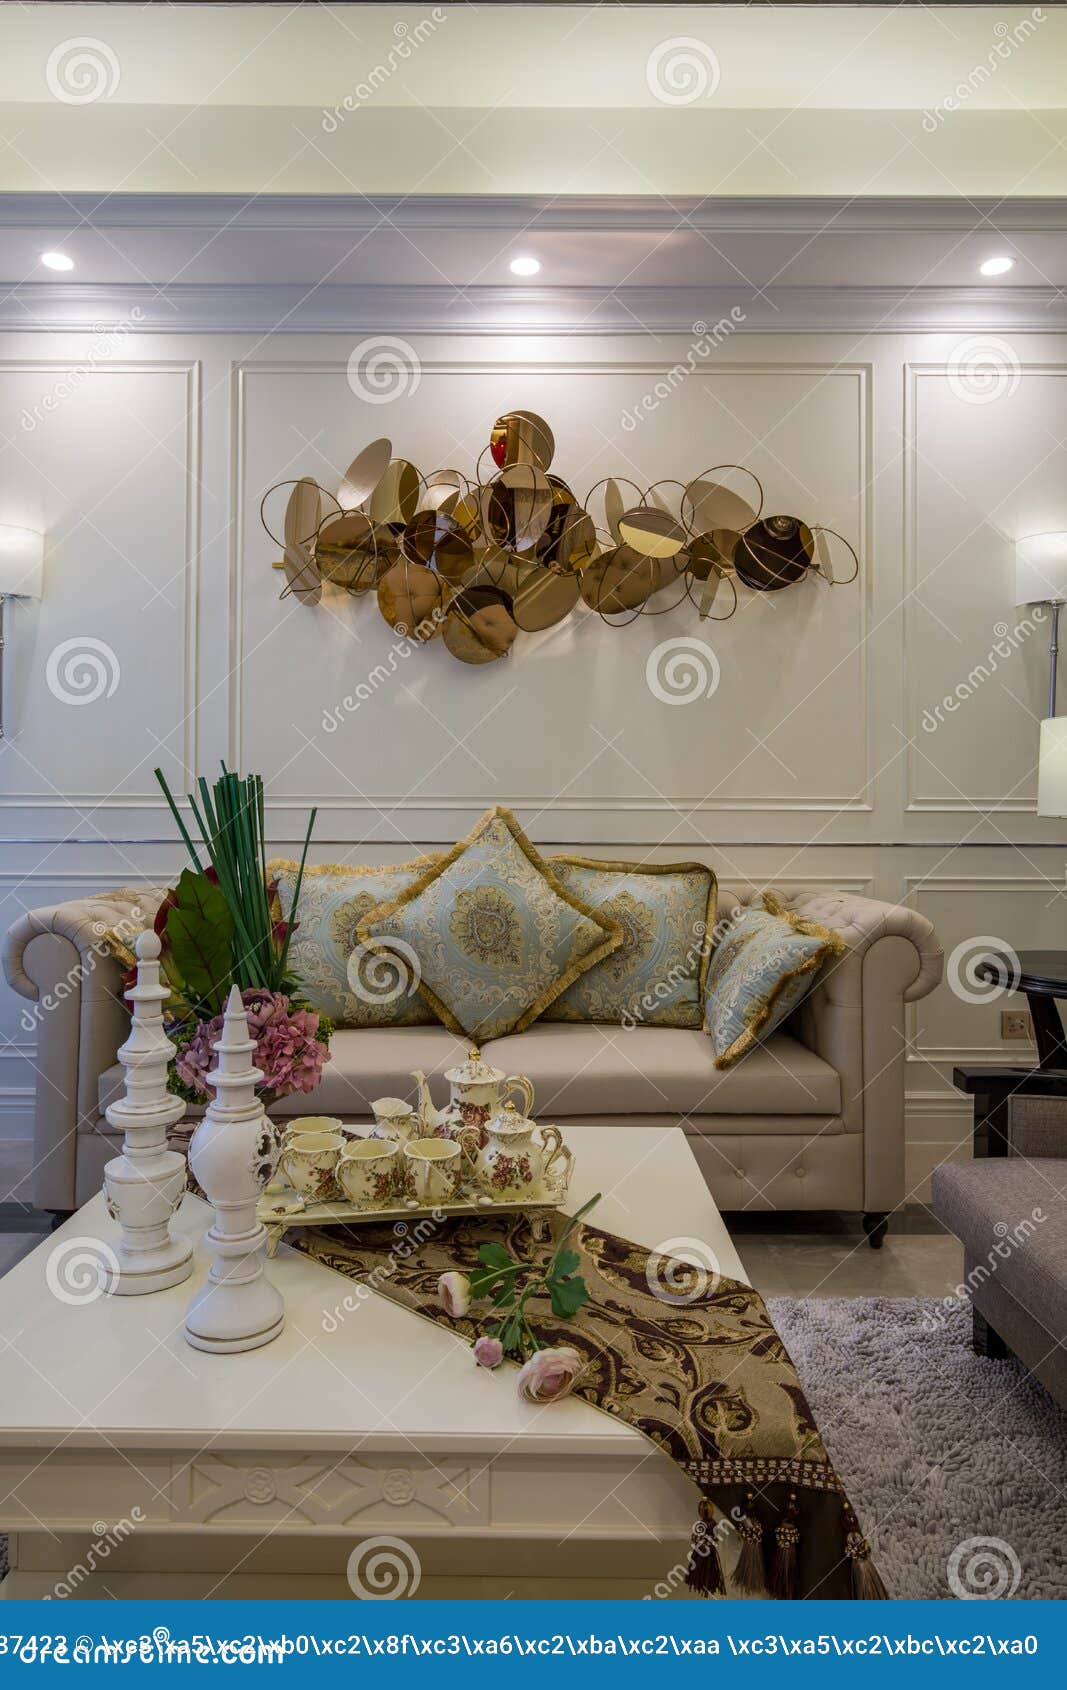 Modern Luxury Interior Home Decoration Design Villa Stock Image ...